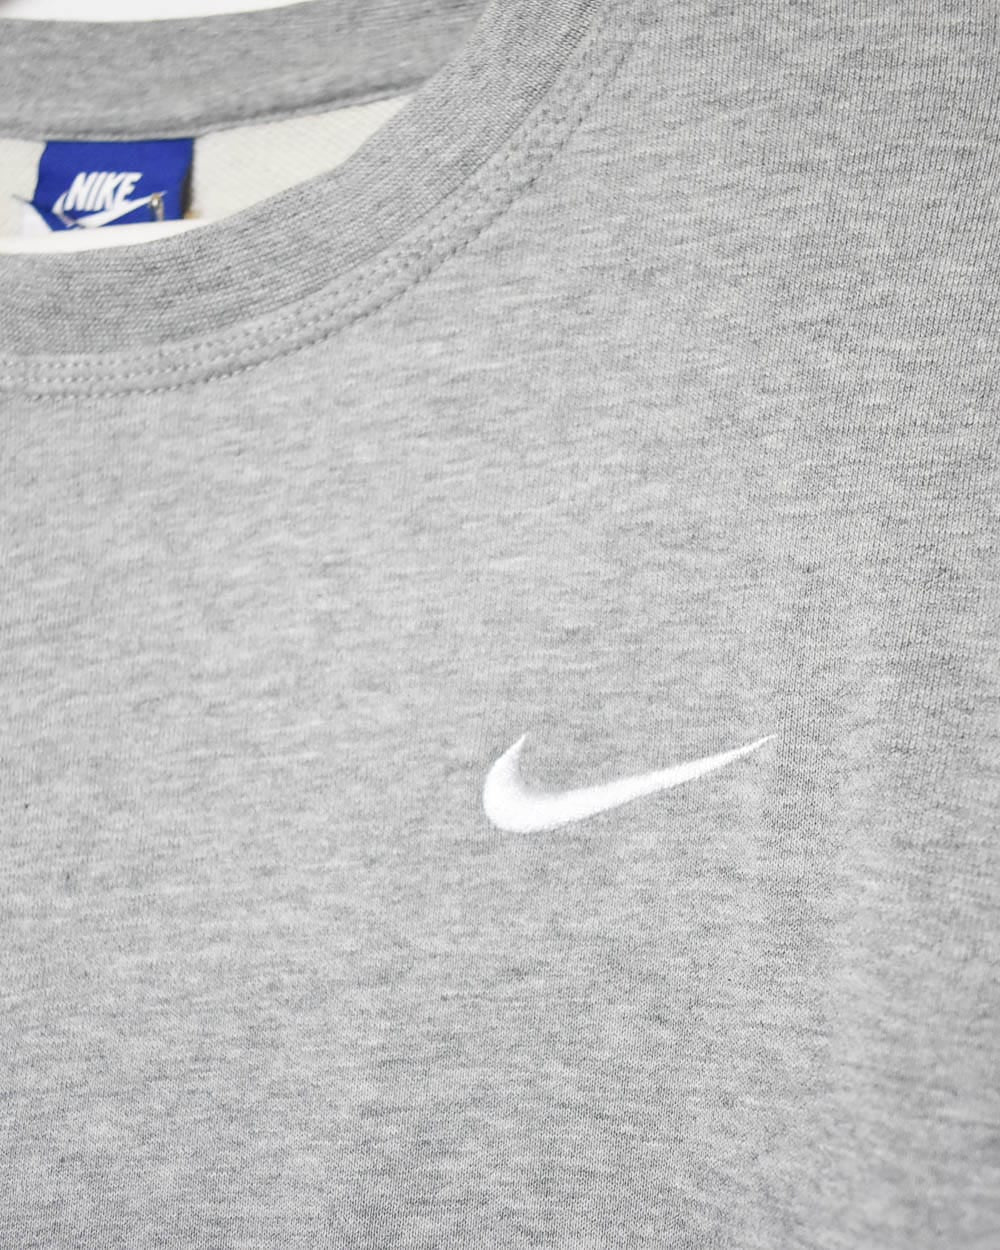 Stone Nike Sweatshirt - Medium